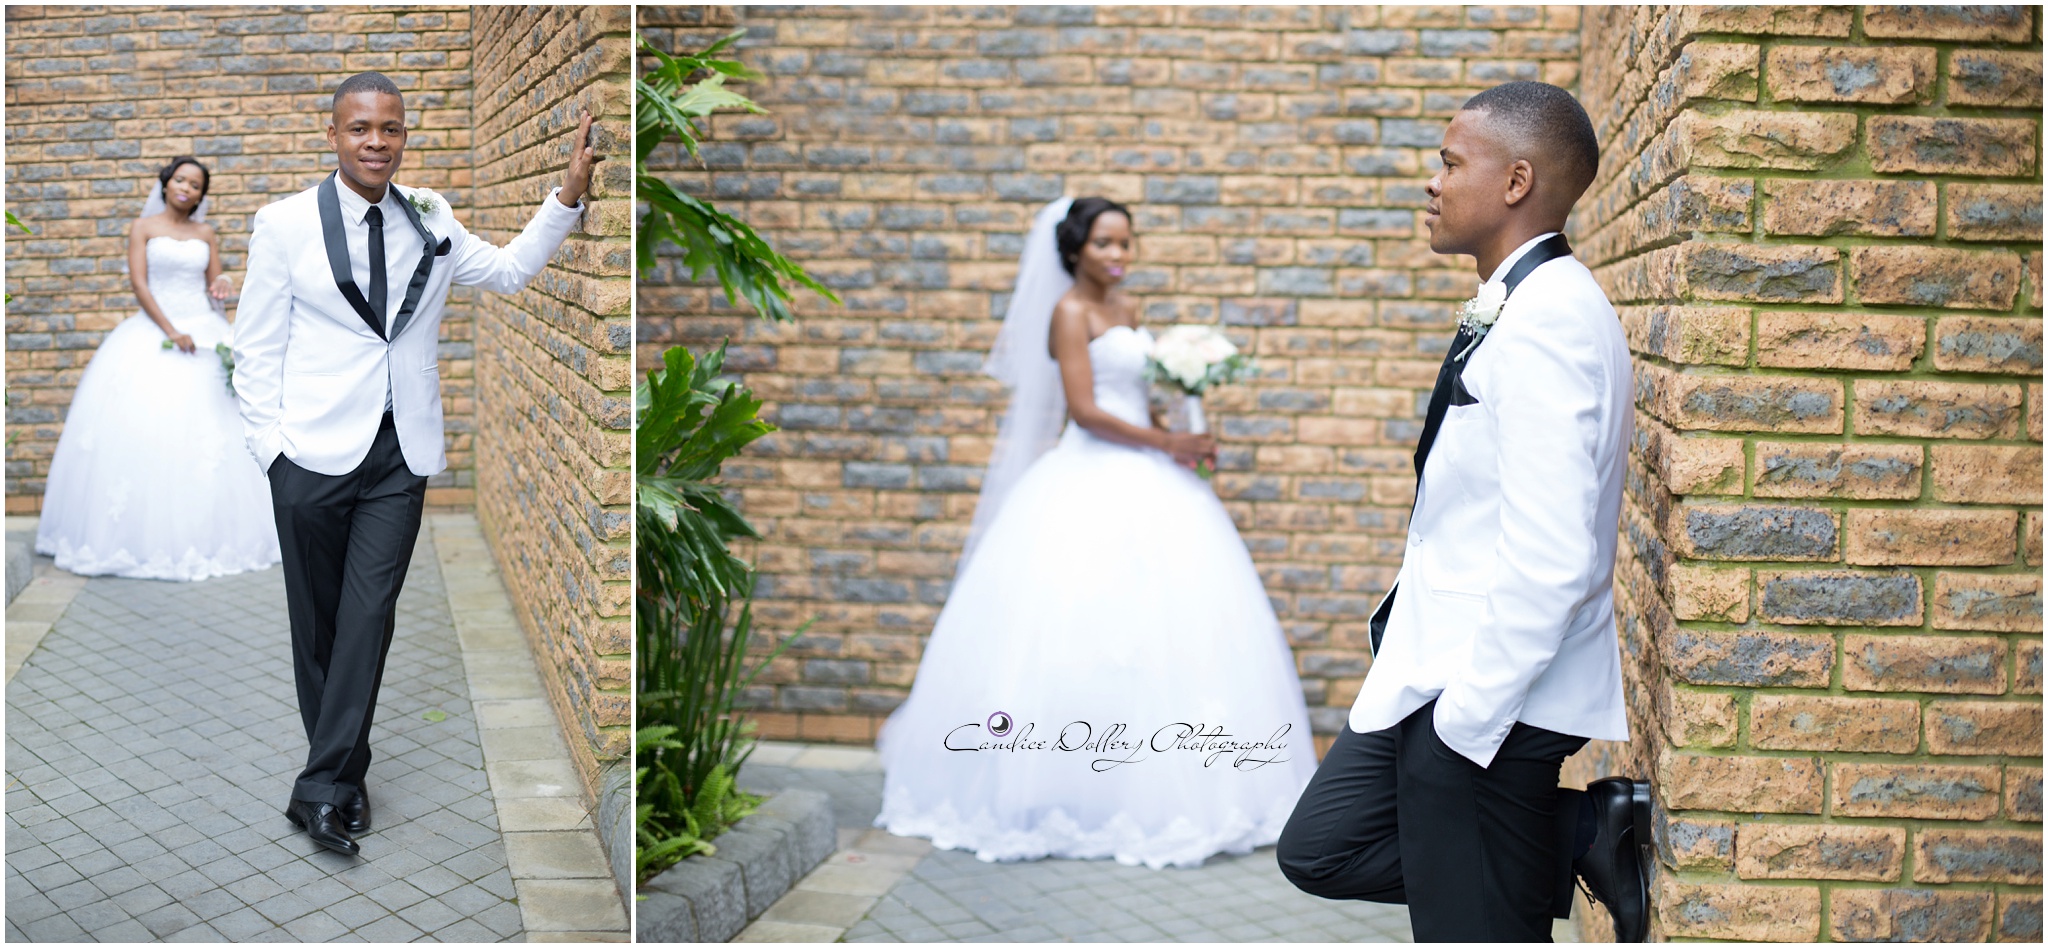 Asanda & Bonga's Wedding - Candice Dollery Photography_8234